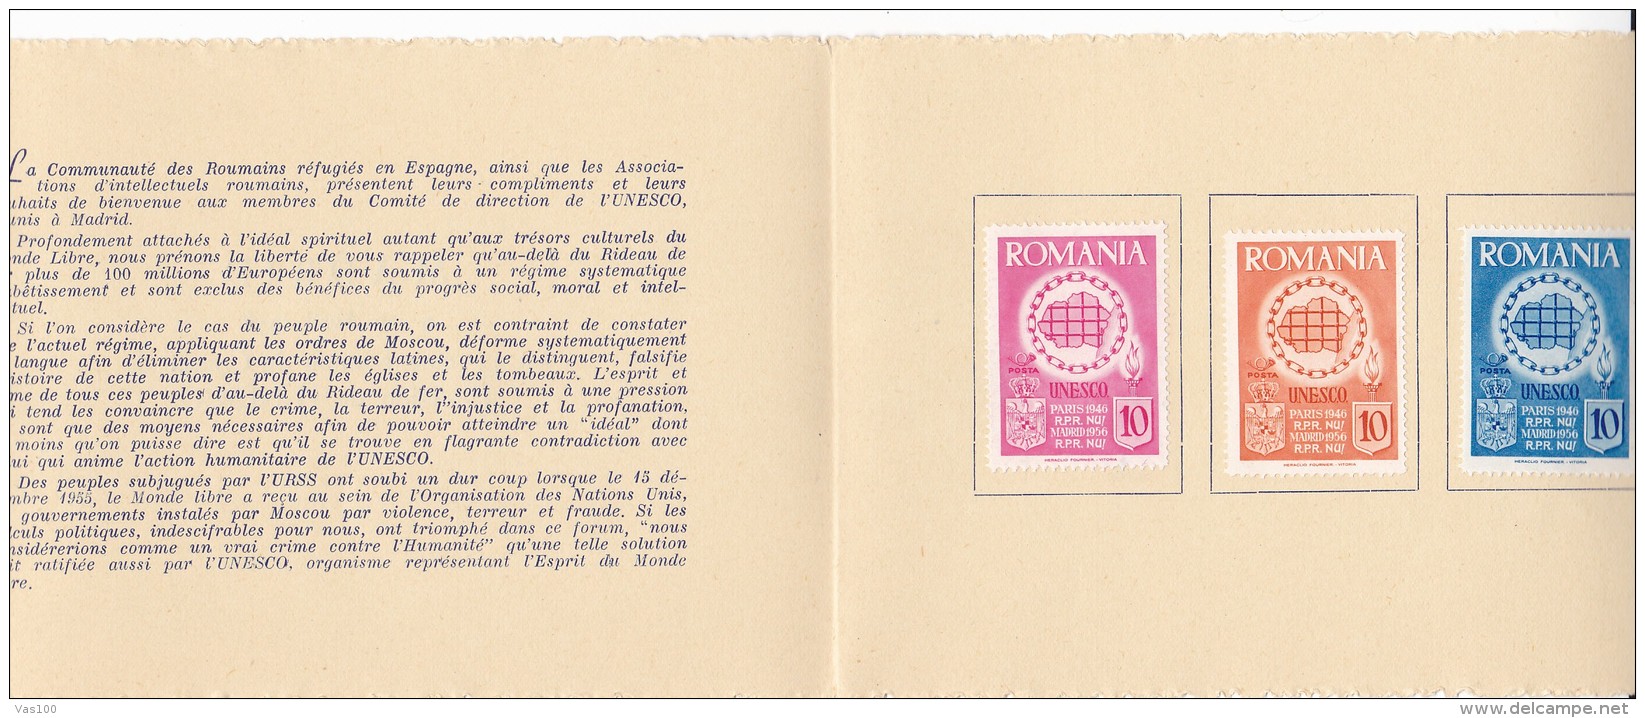 #T100    REUNION OF UNESCO COUNCIL, MADRID,    BOOKLETS,   1956   , SPAIN EXIL, ROMANIA. - Booklets